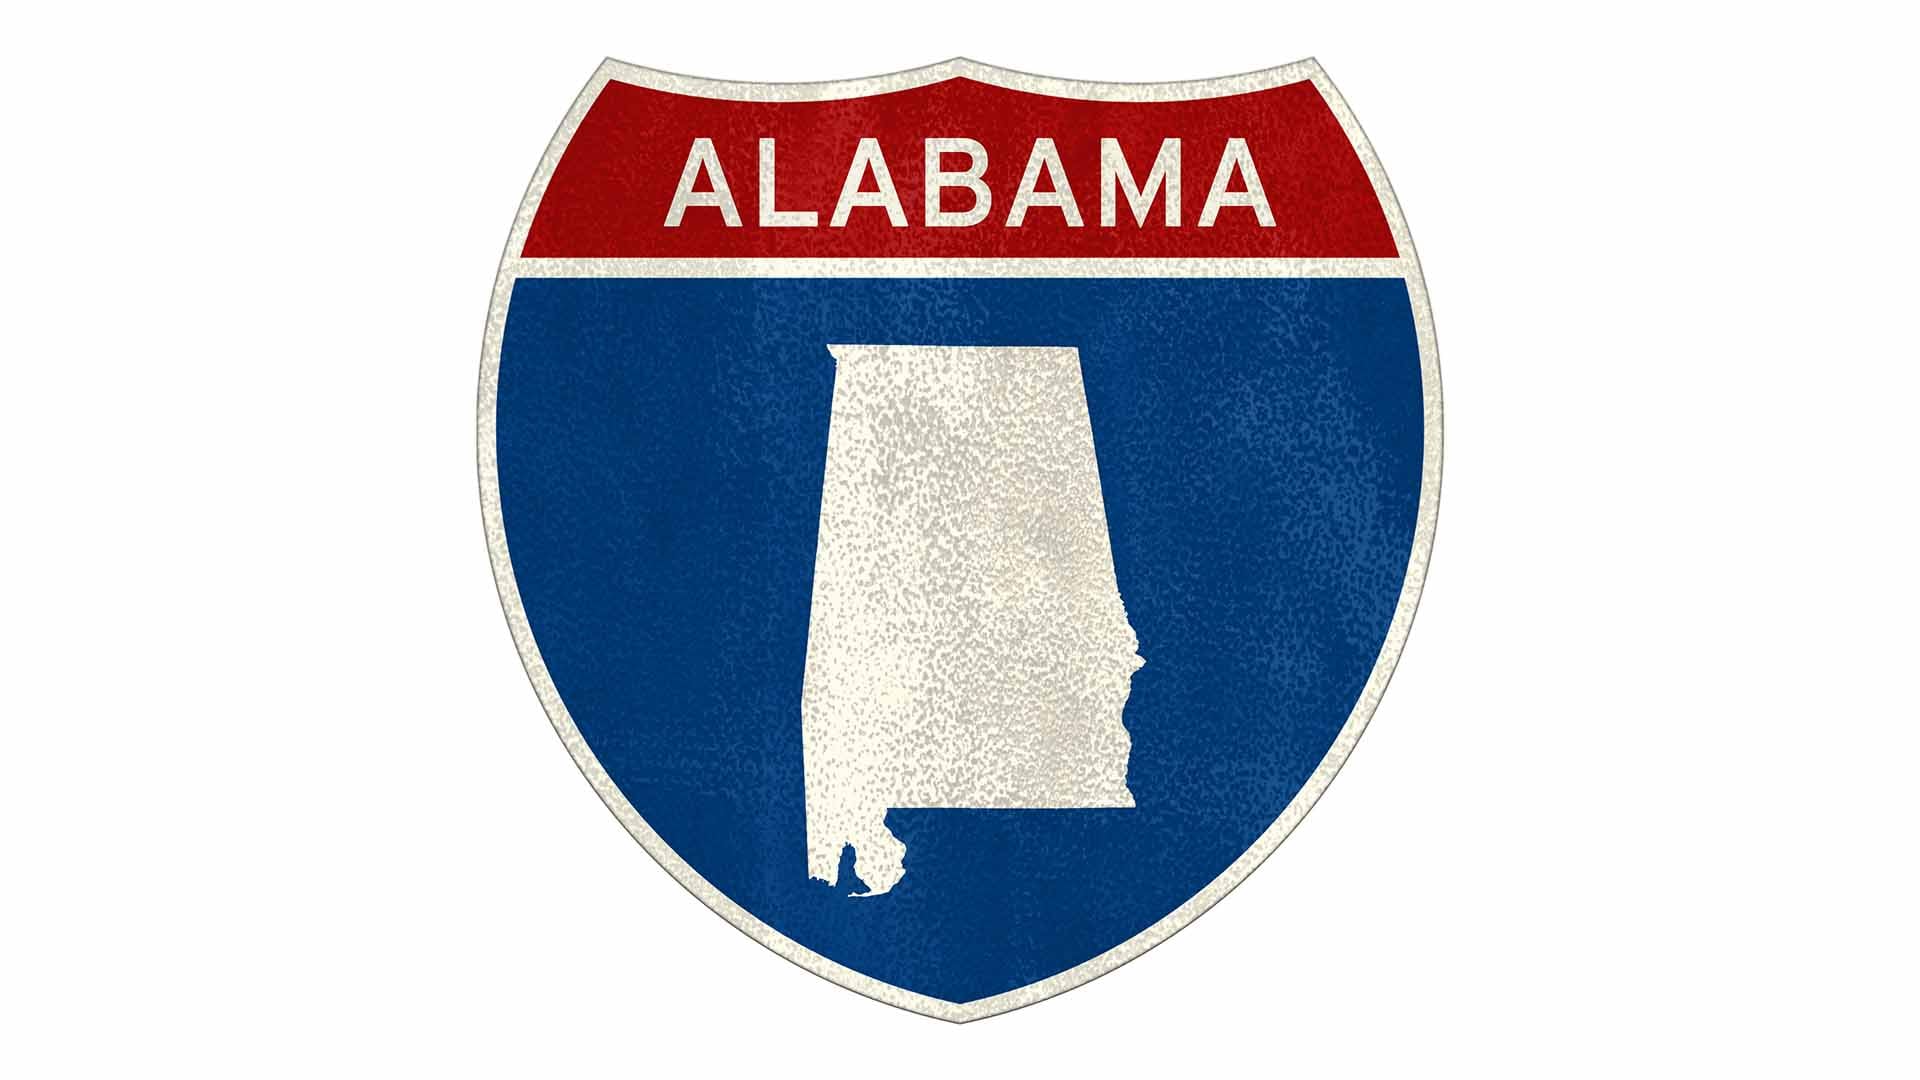 Alabama state roadside sign